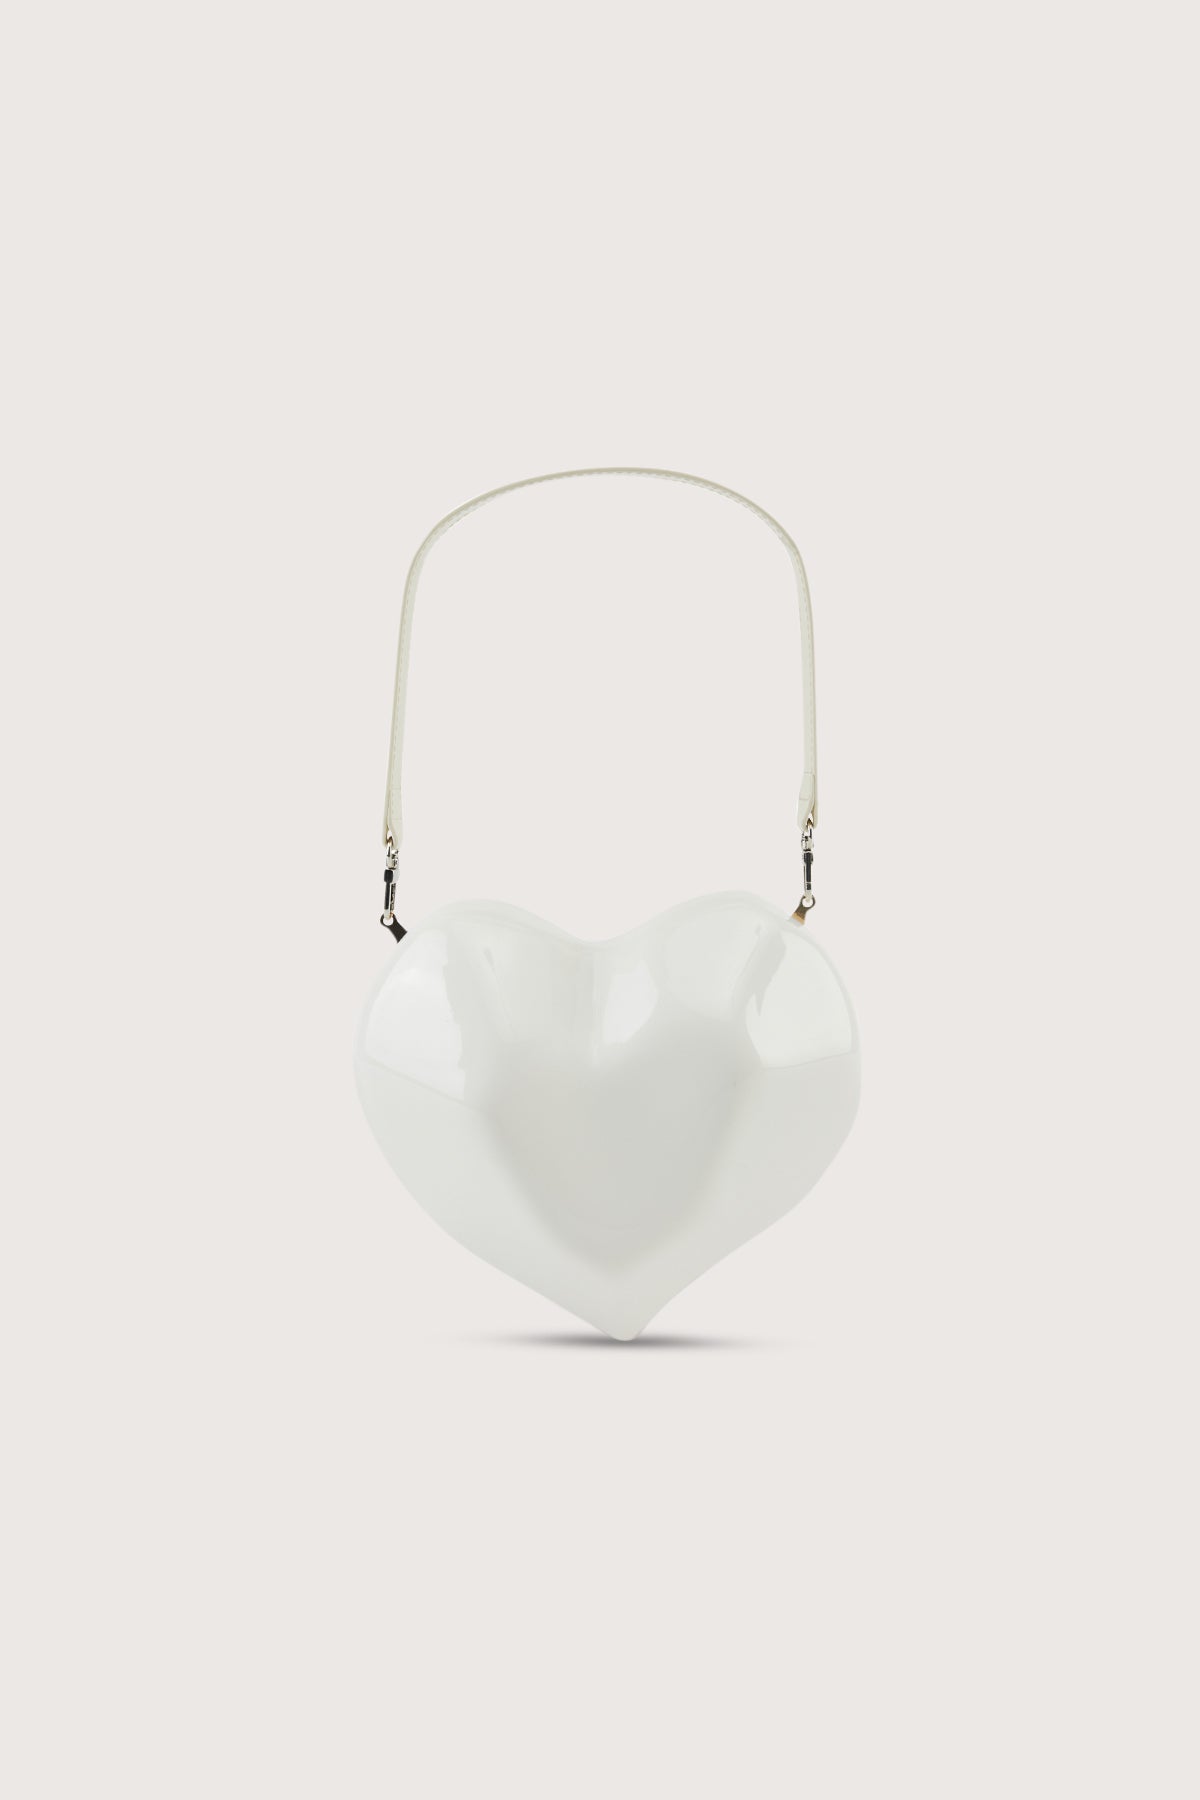 bag heart shaped